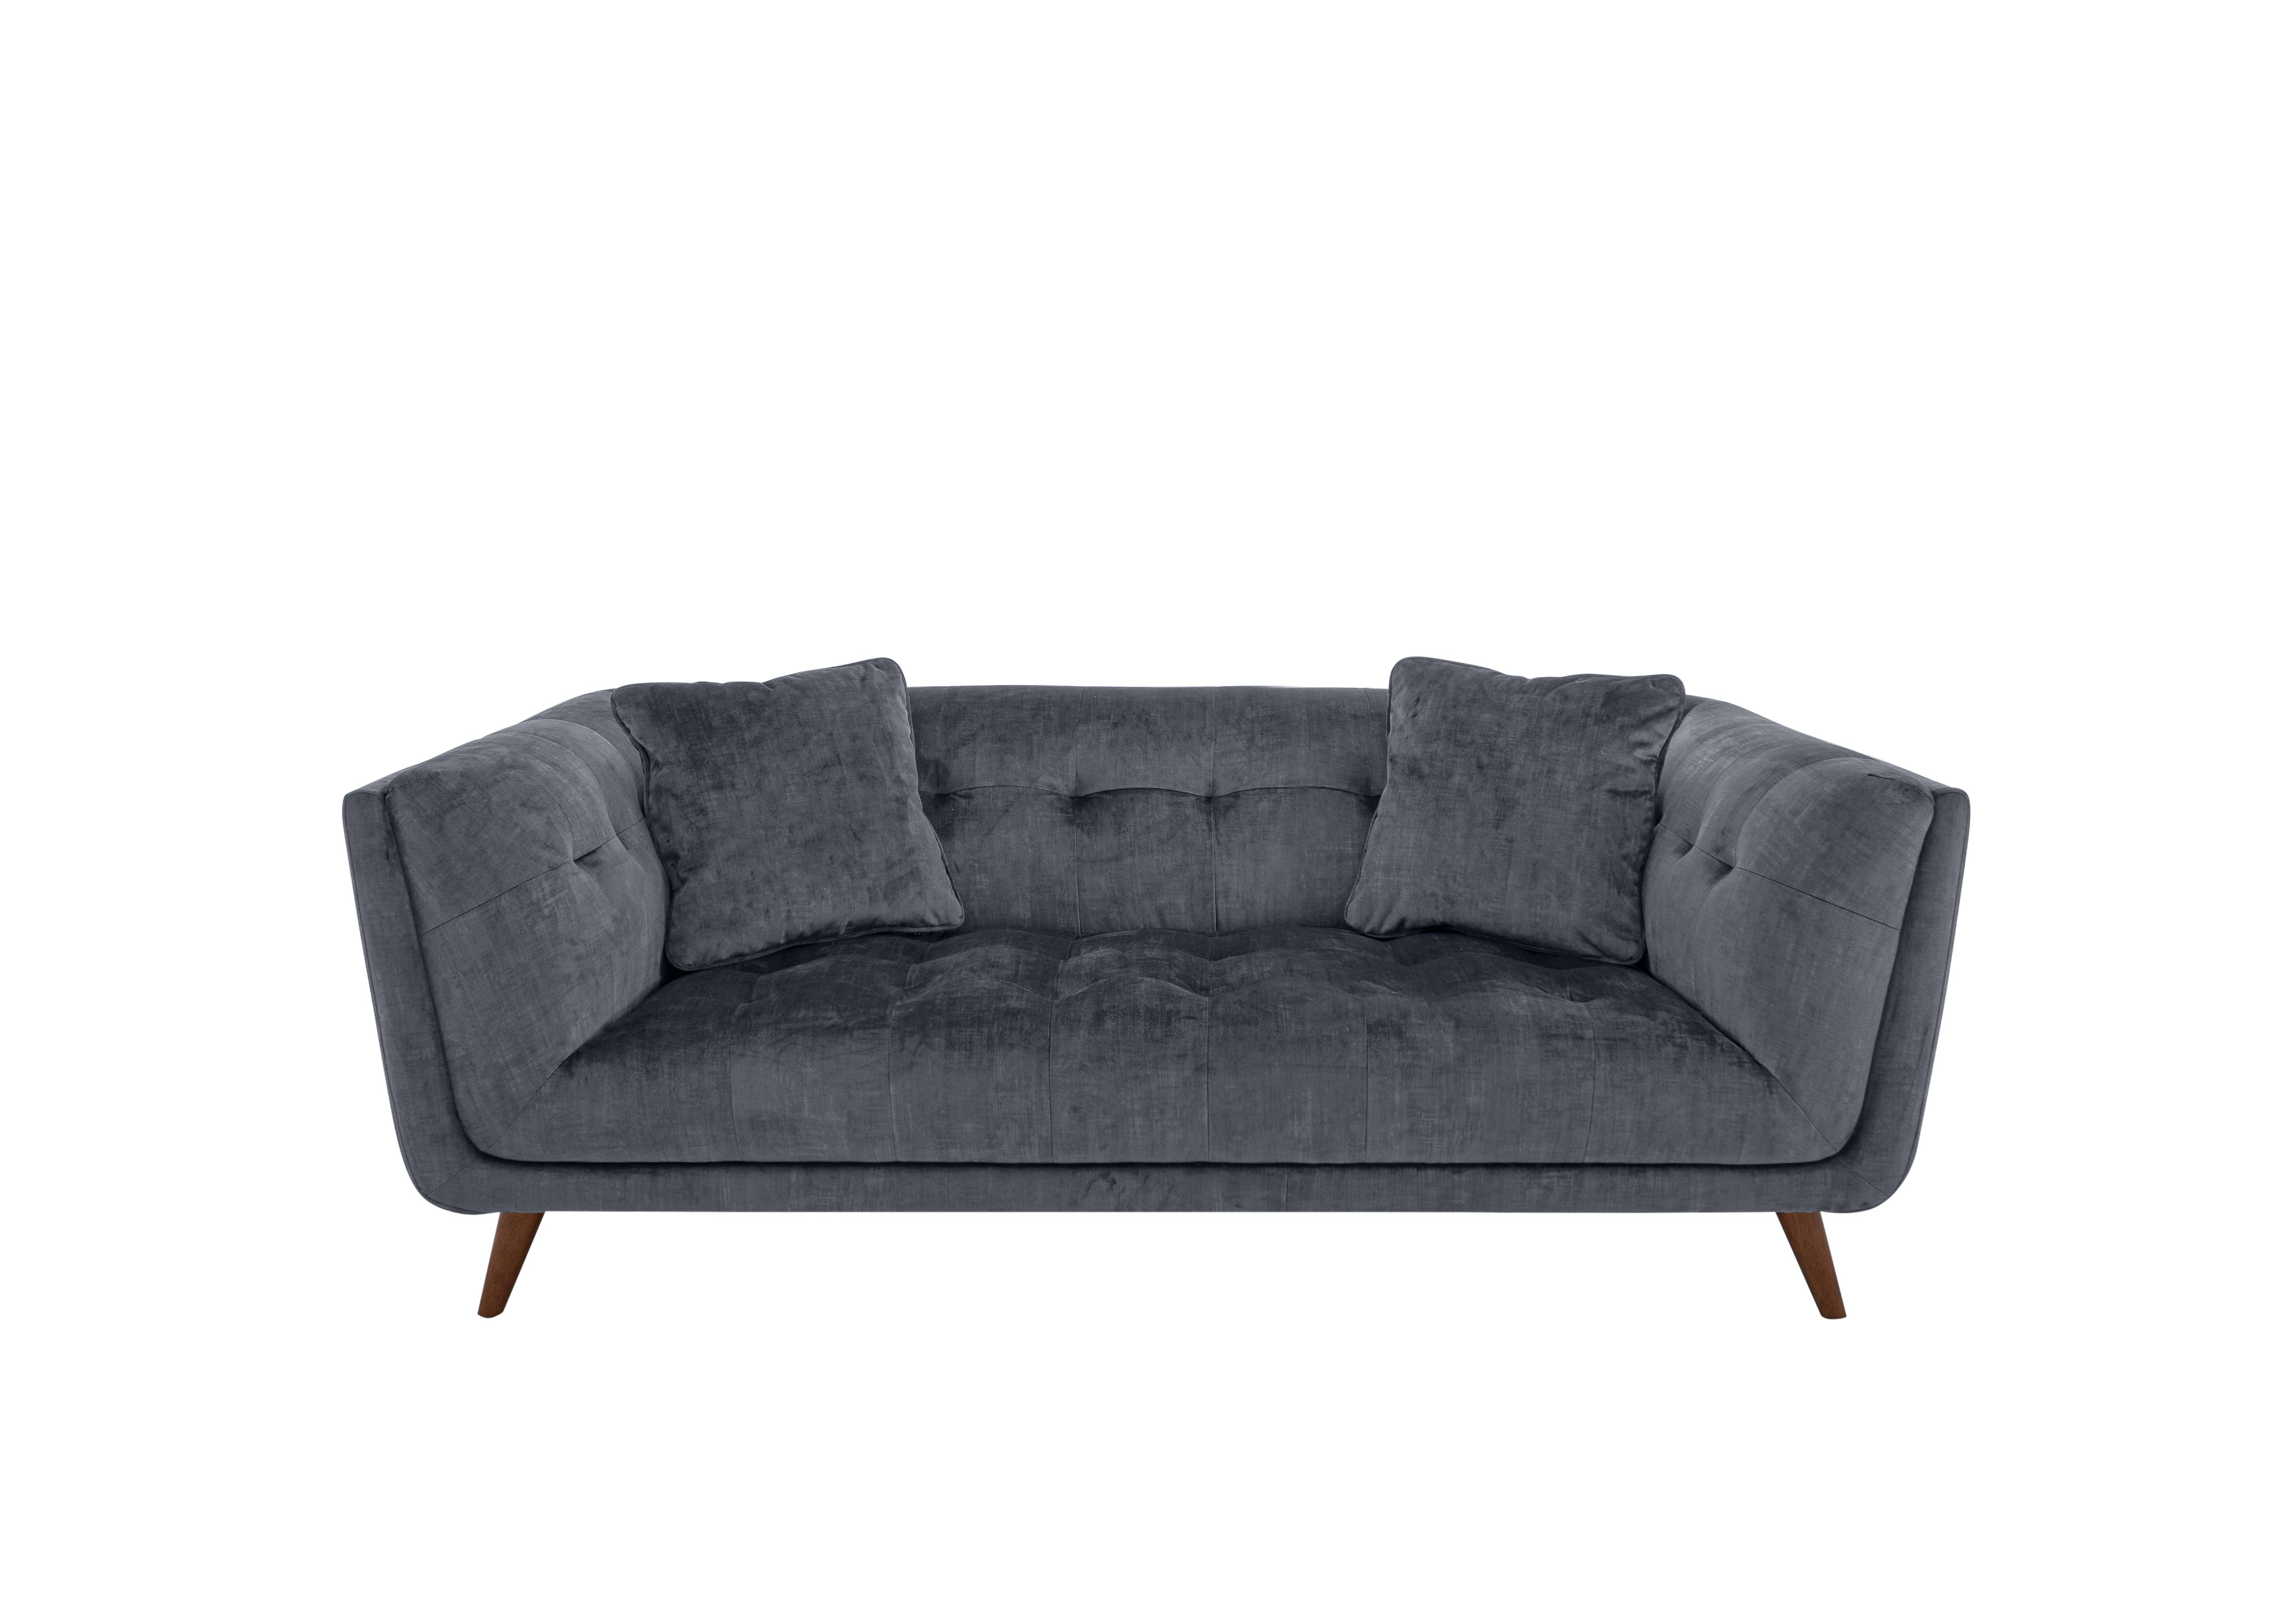 Rene Large 2 Seater Fabric Sofa in 52001 Heritage Granite Wa Ft on Furniture Village